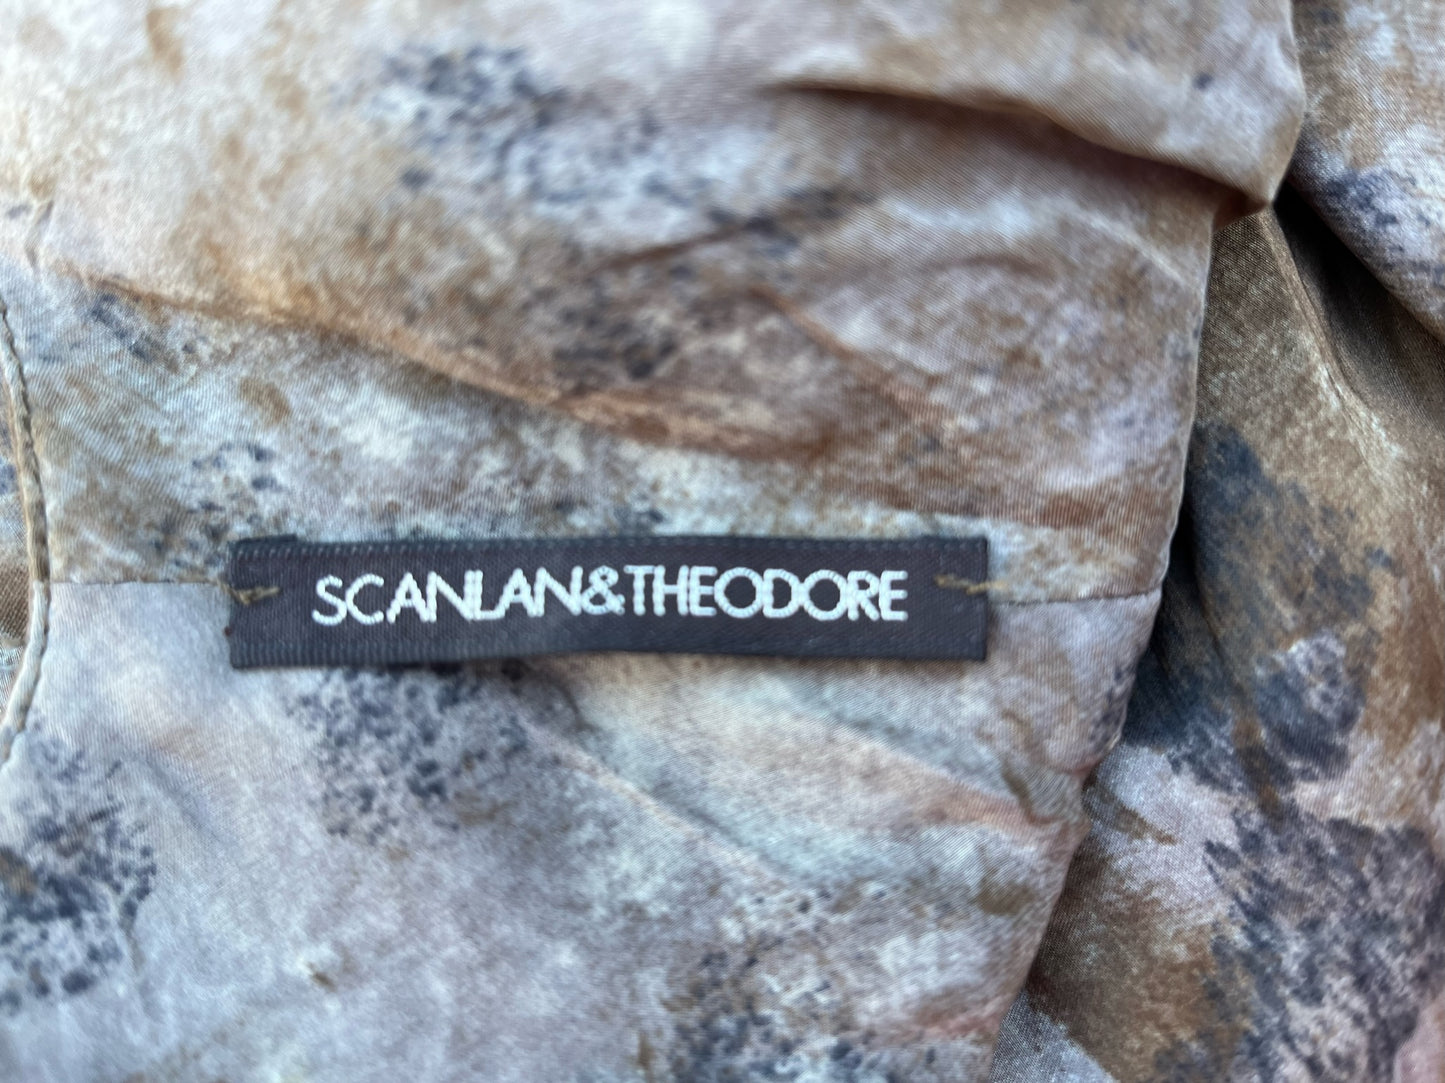 Scanlan Theodore label